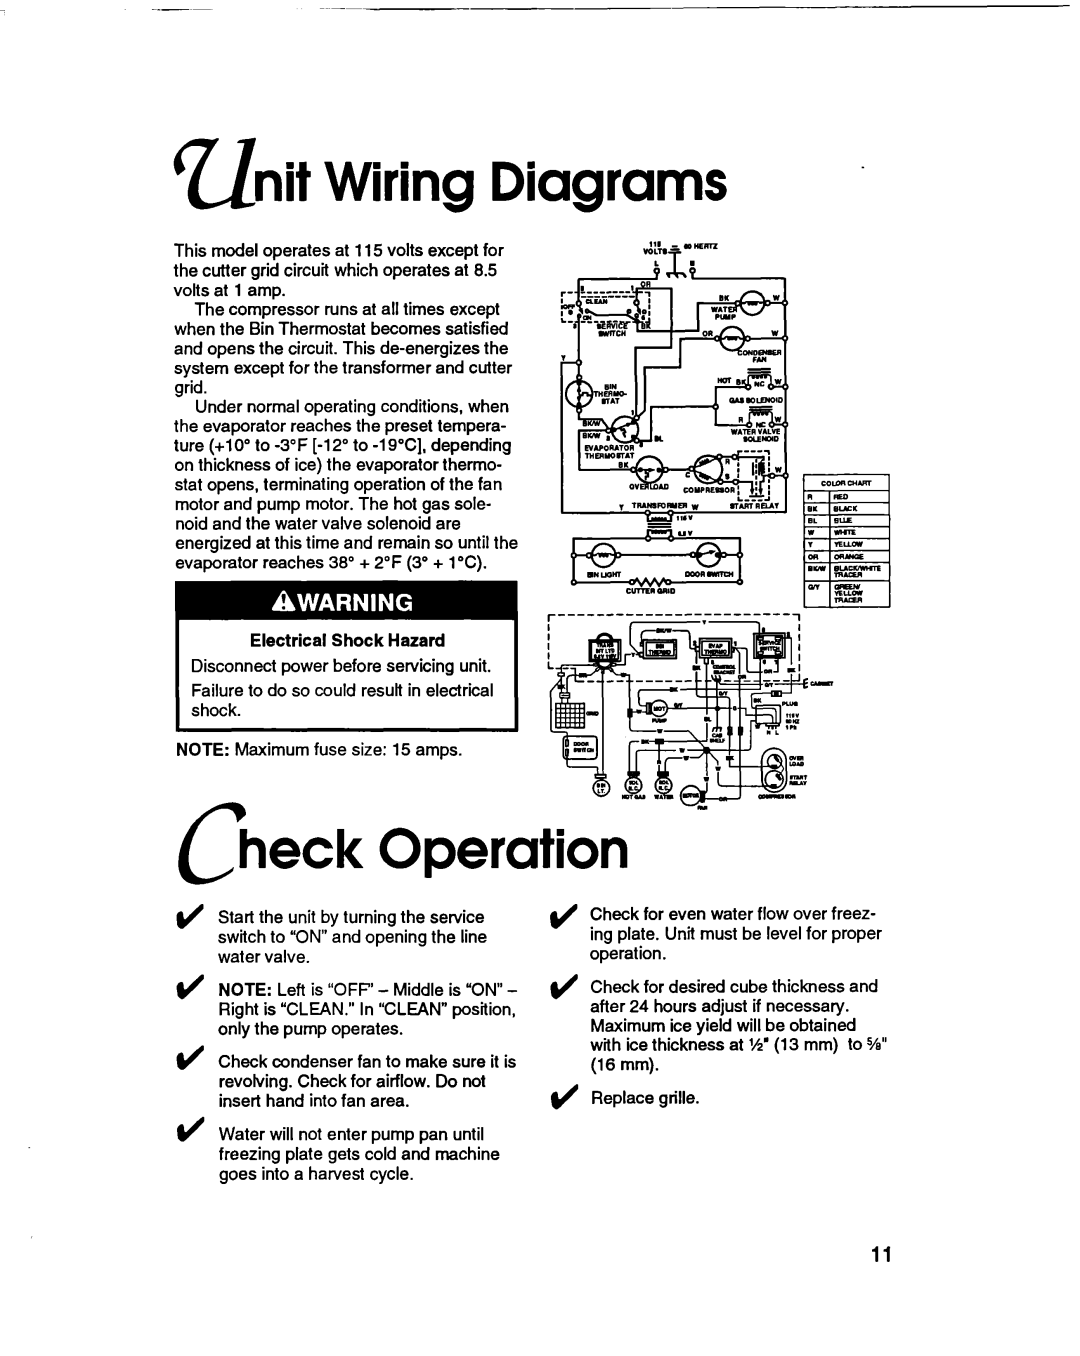 KitchenAid KULSL85 installation instructions 21nit Wiring Diagrams, Check Operation 